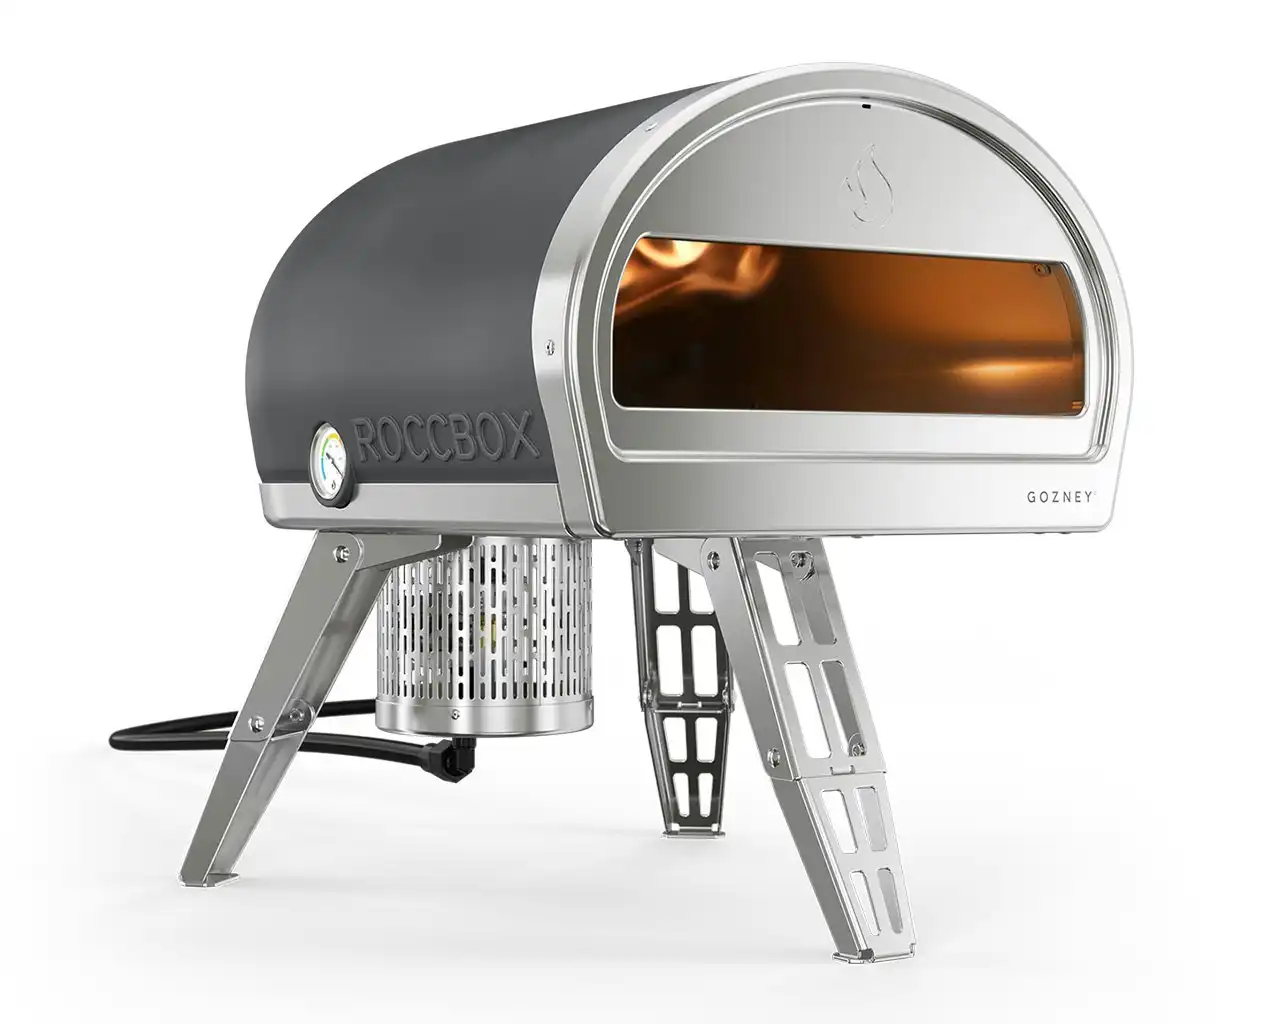 Gozney Roccbox Portable Pizza Oven - Grey